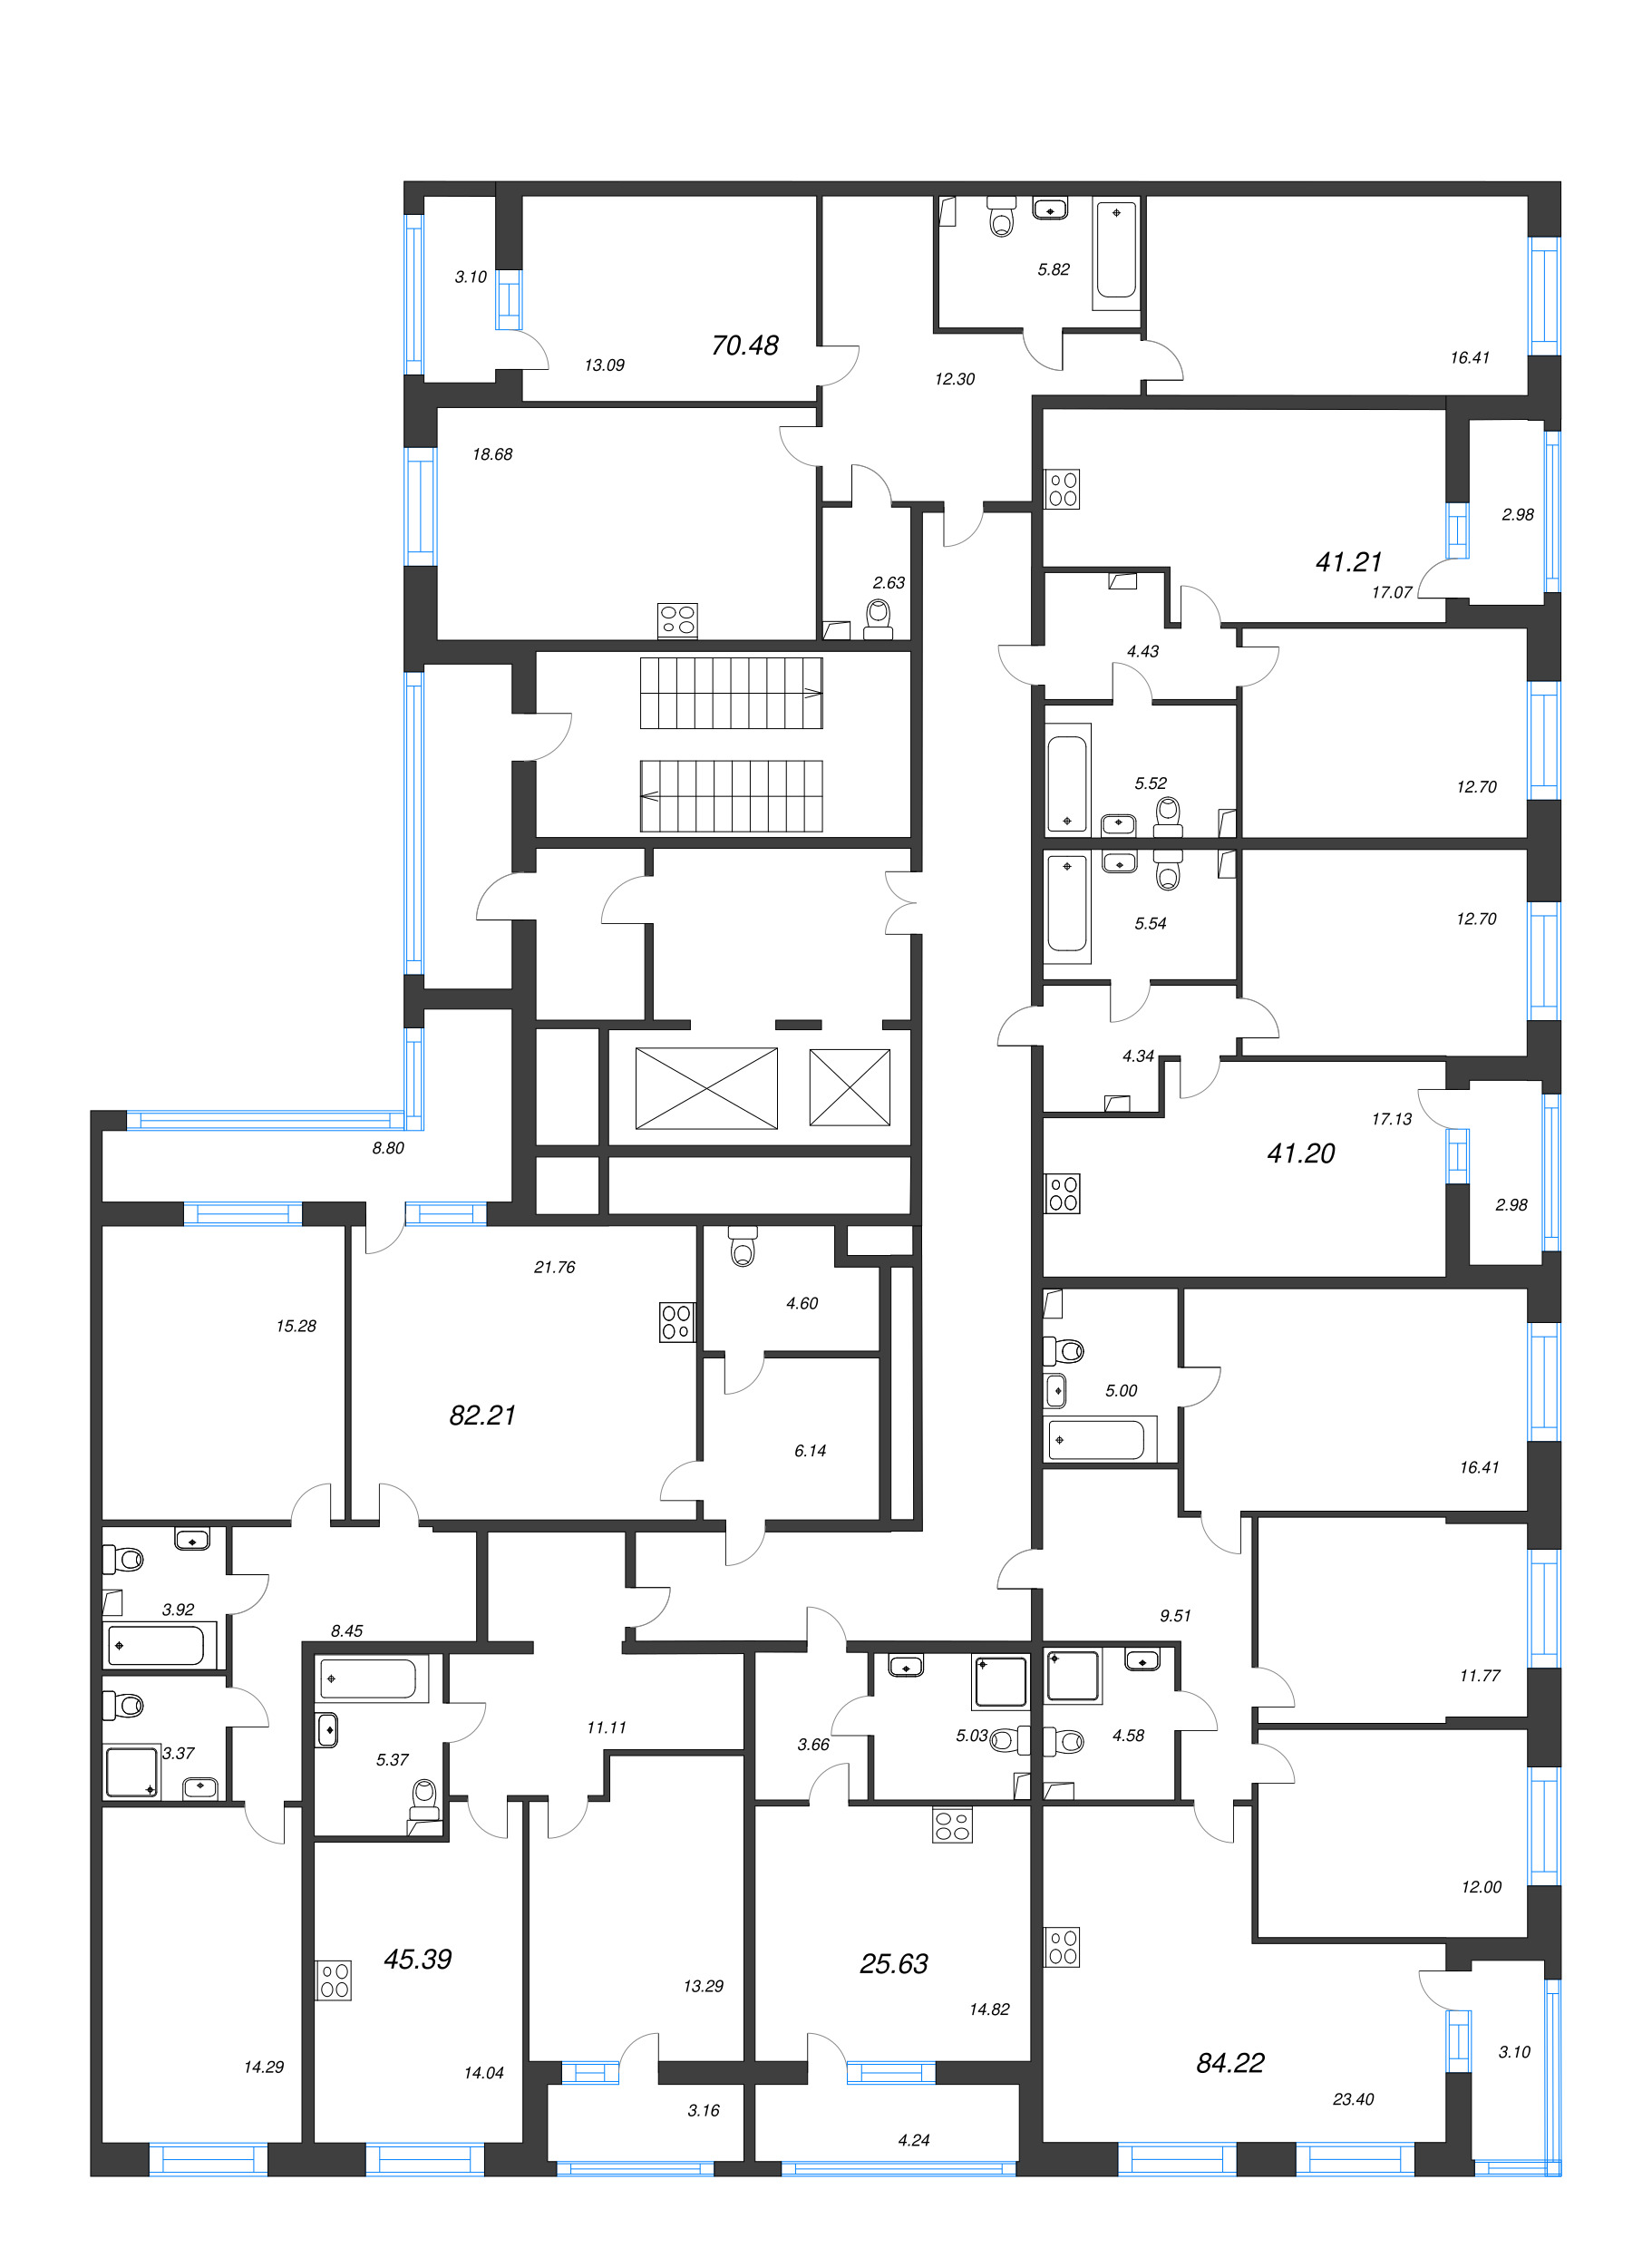 3-комнатная (Евро) квартира, 70.48 м² - планировка этажа